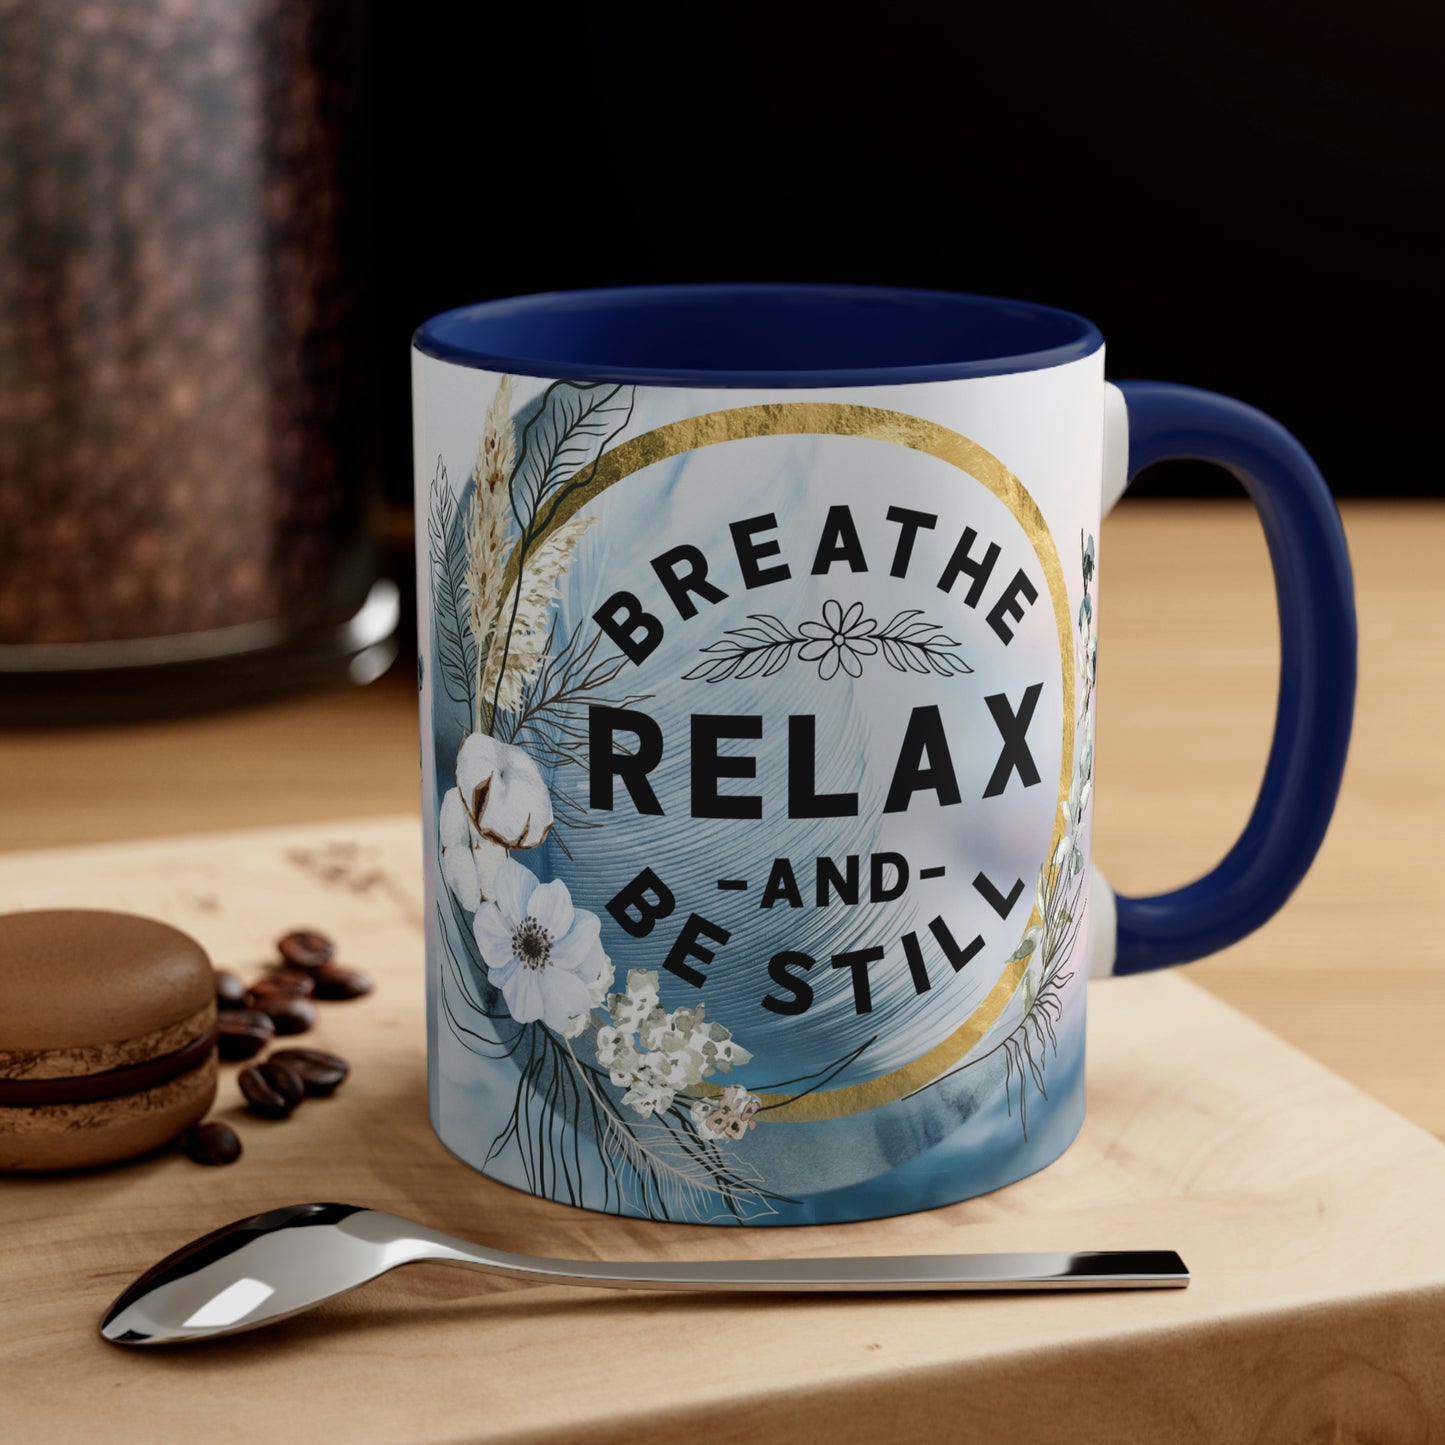 Breathe, Relax, Be Still Coffee Mug,